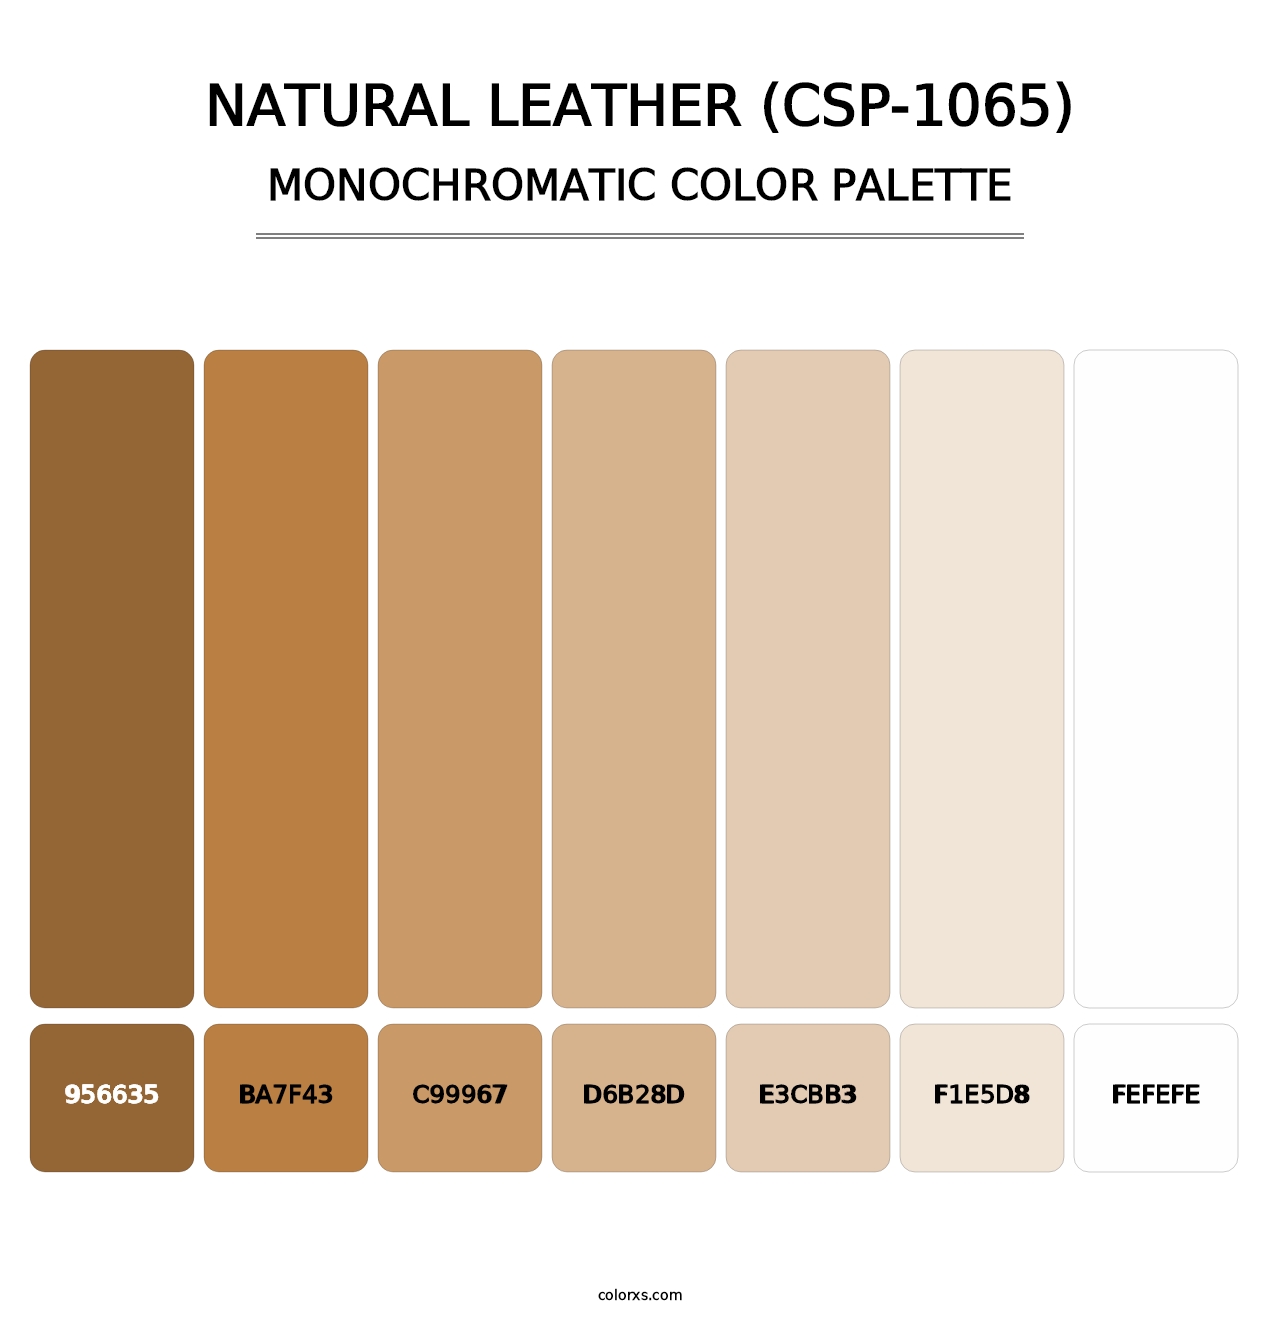 Natural Leather (CSP-1065) - Monochromatic Color Palette